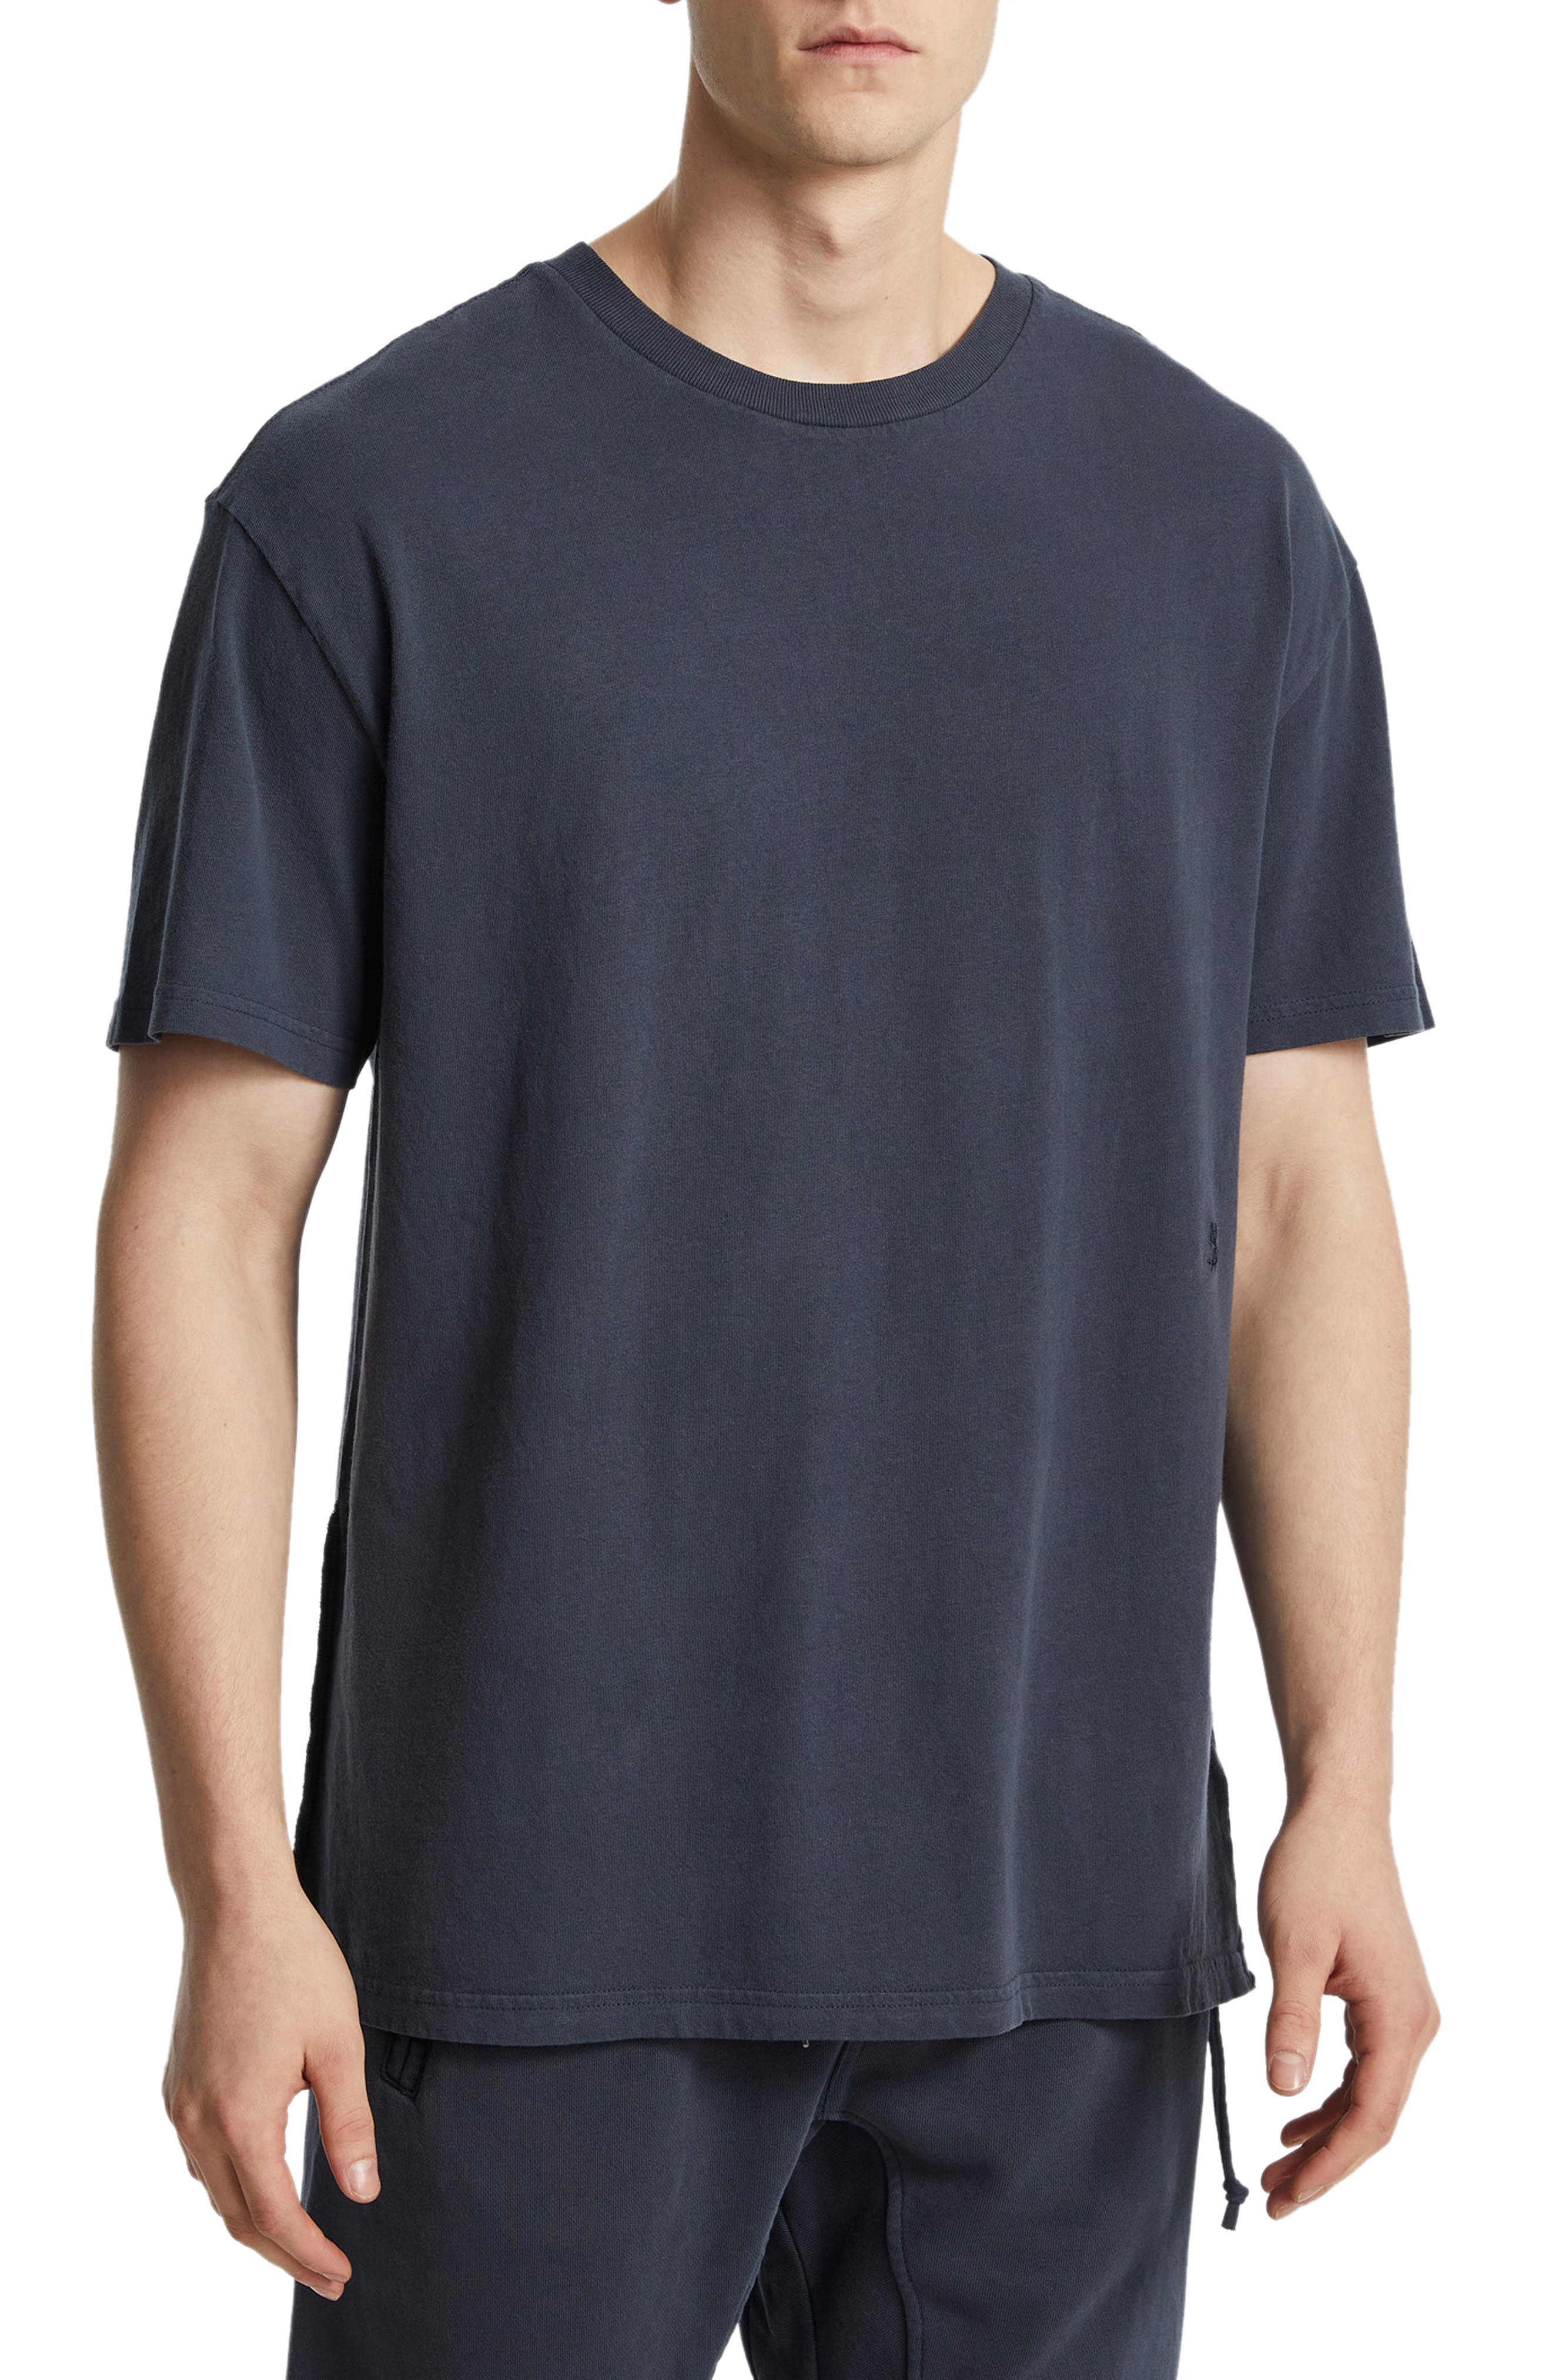 Ksubi Kross Biggie Cotton T-Shirt in Blue at Nordstrom, Size X-Large